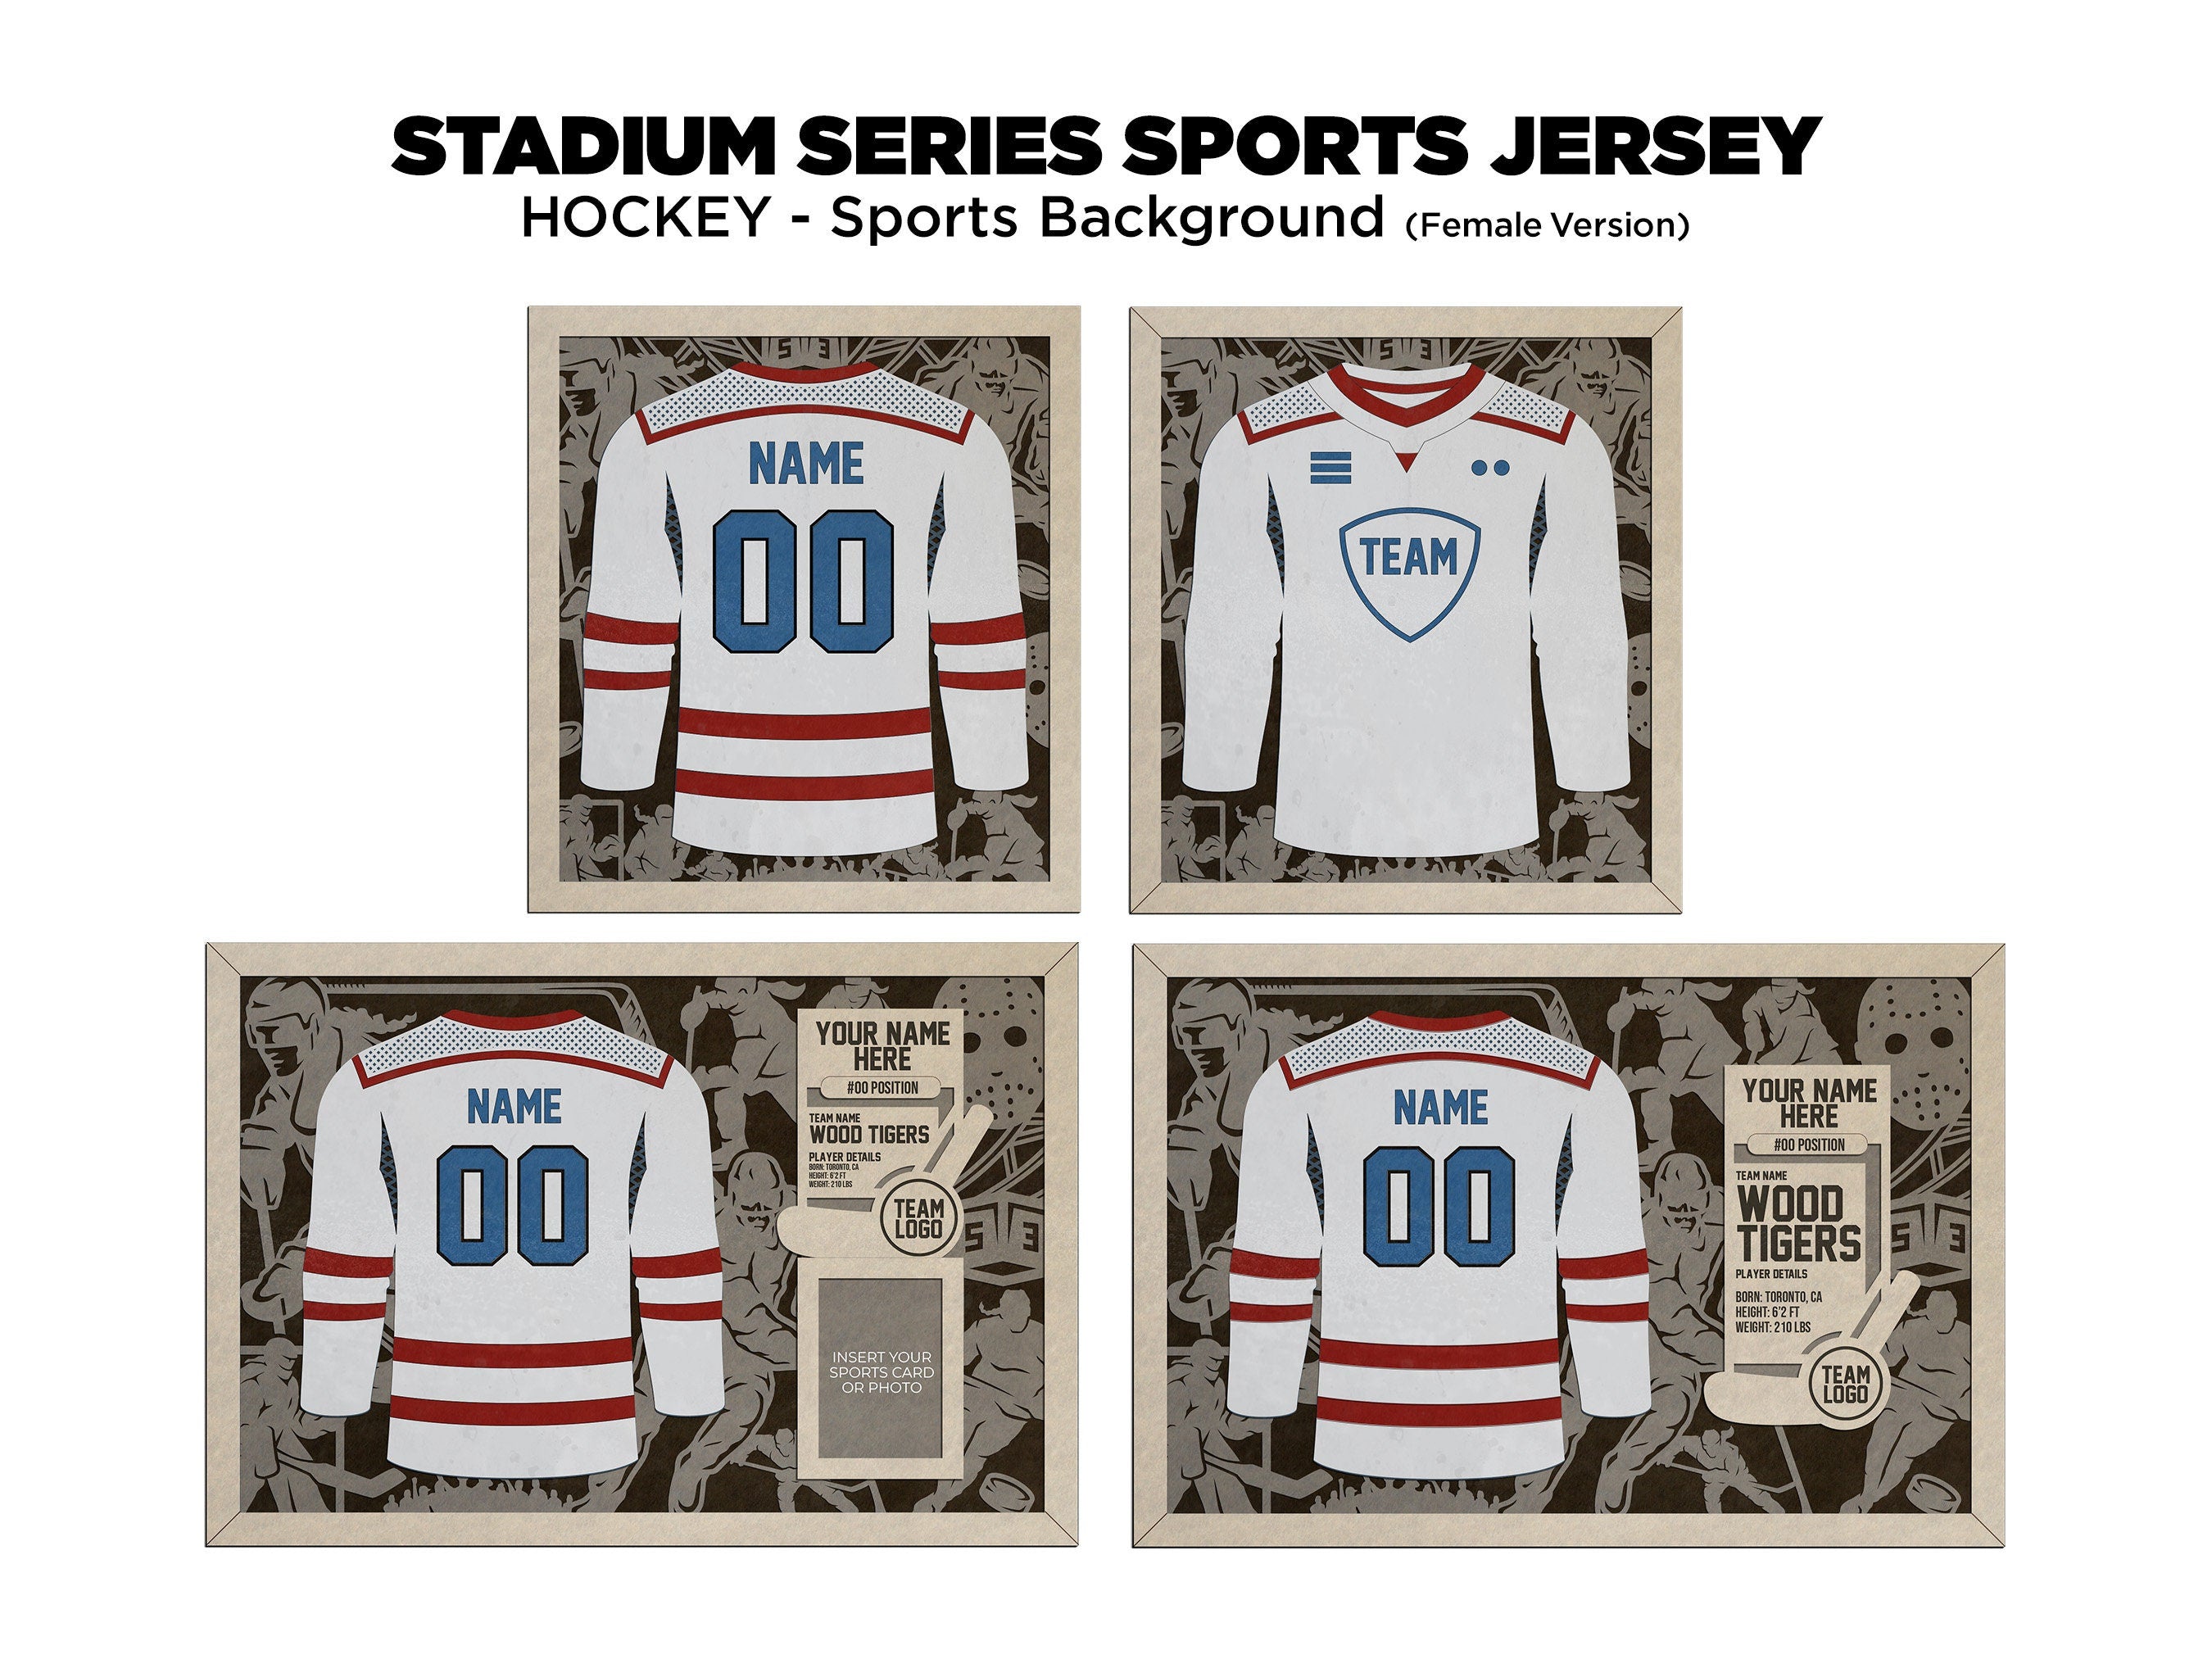 Rangers Stadium Series jersey